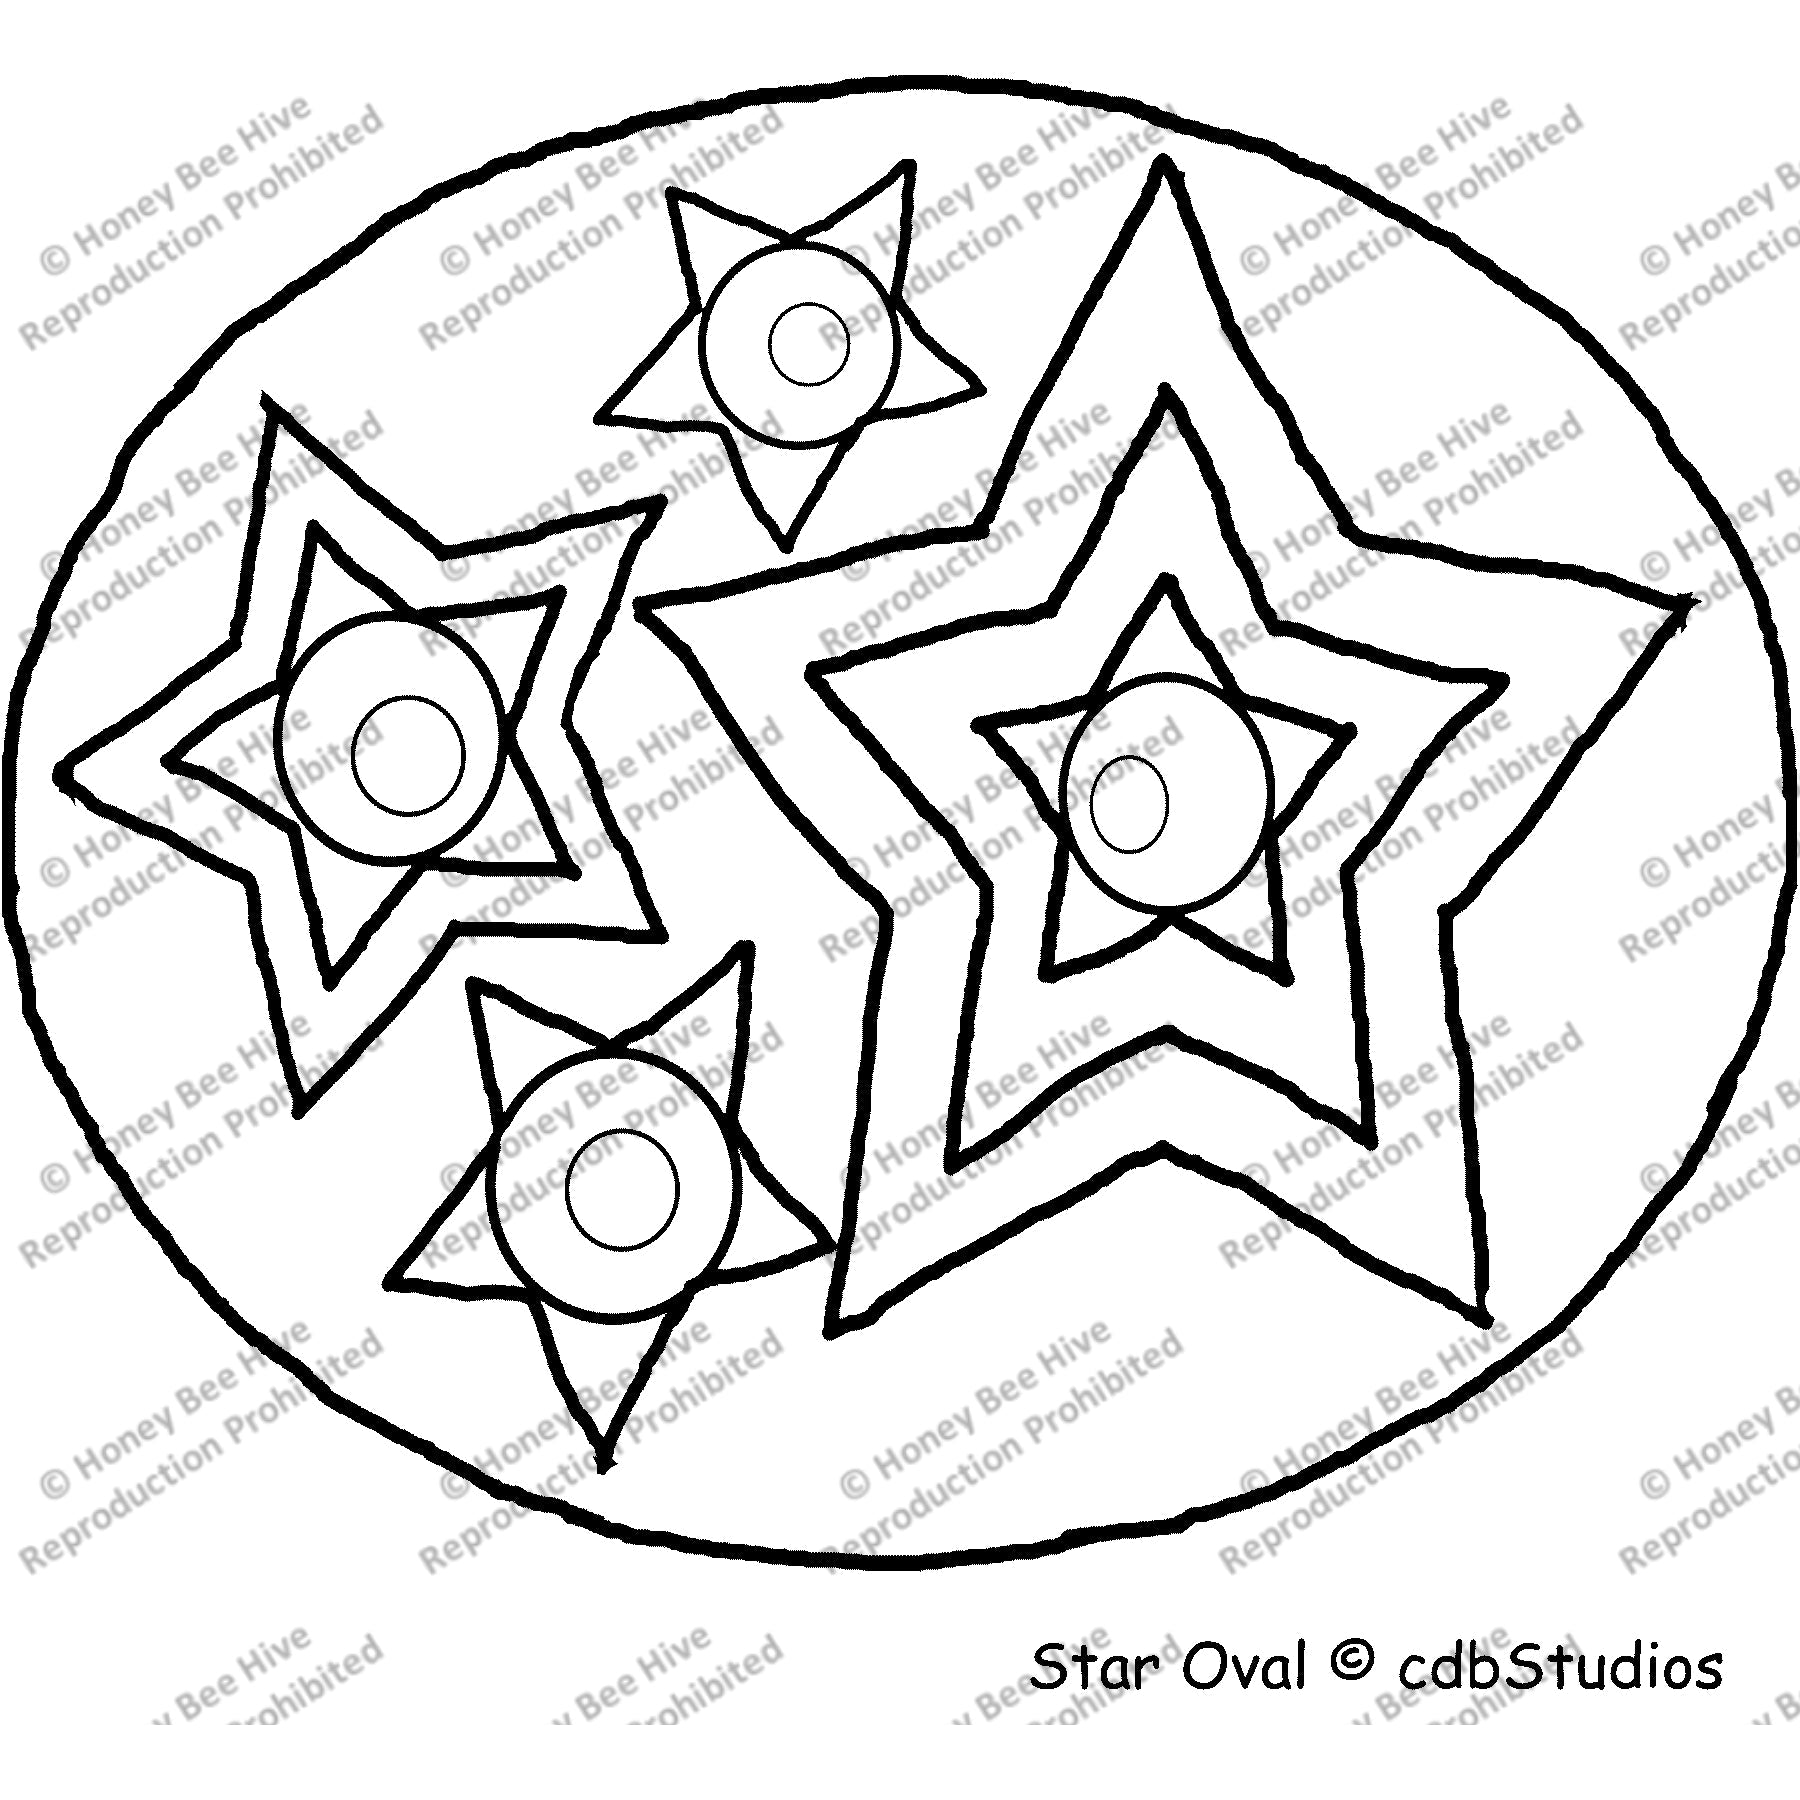 Star Oval, rug hooking pattern